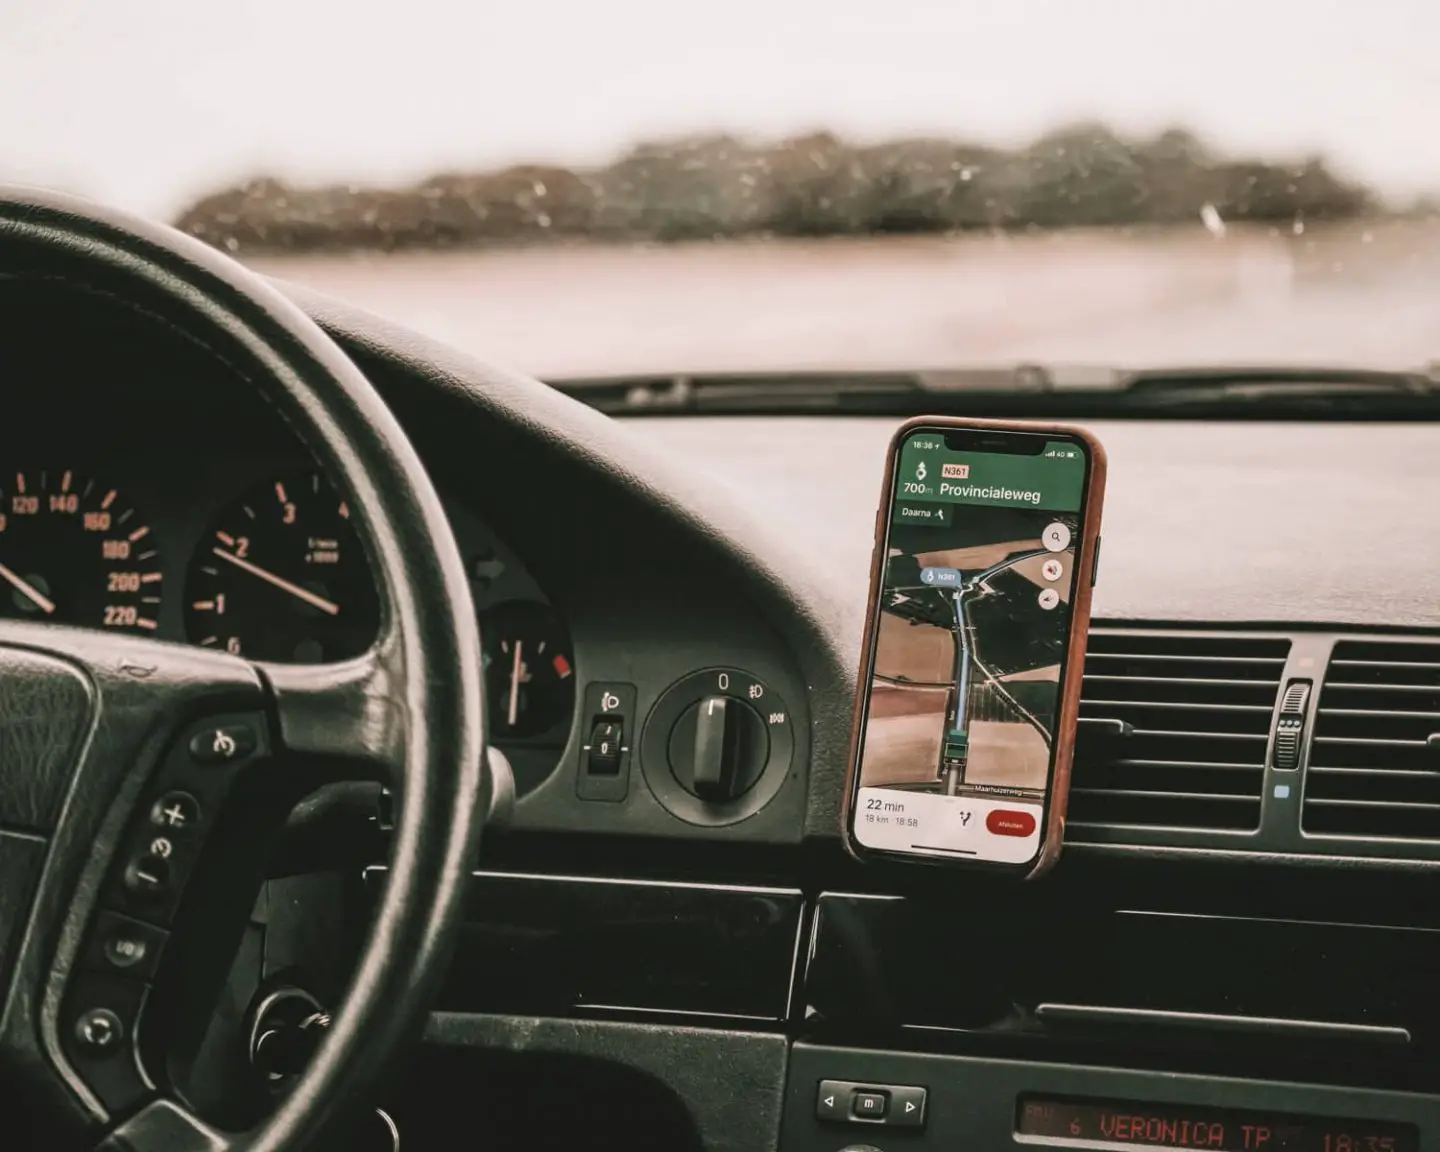 google map on phone inside a car